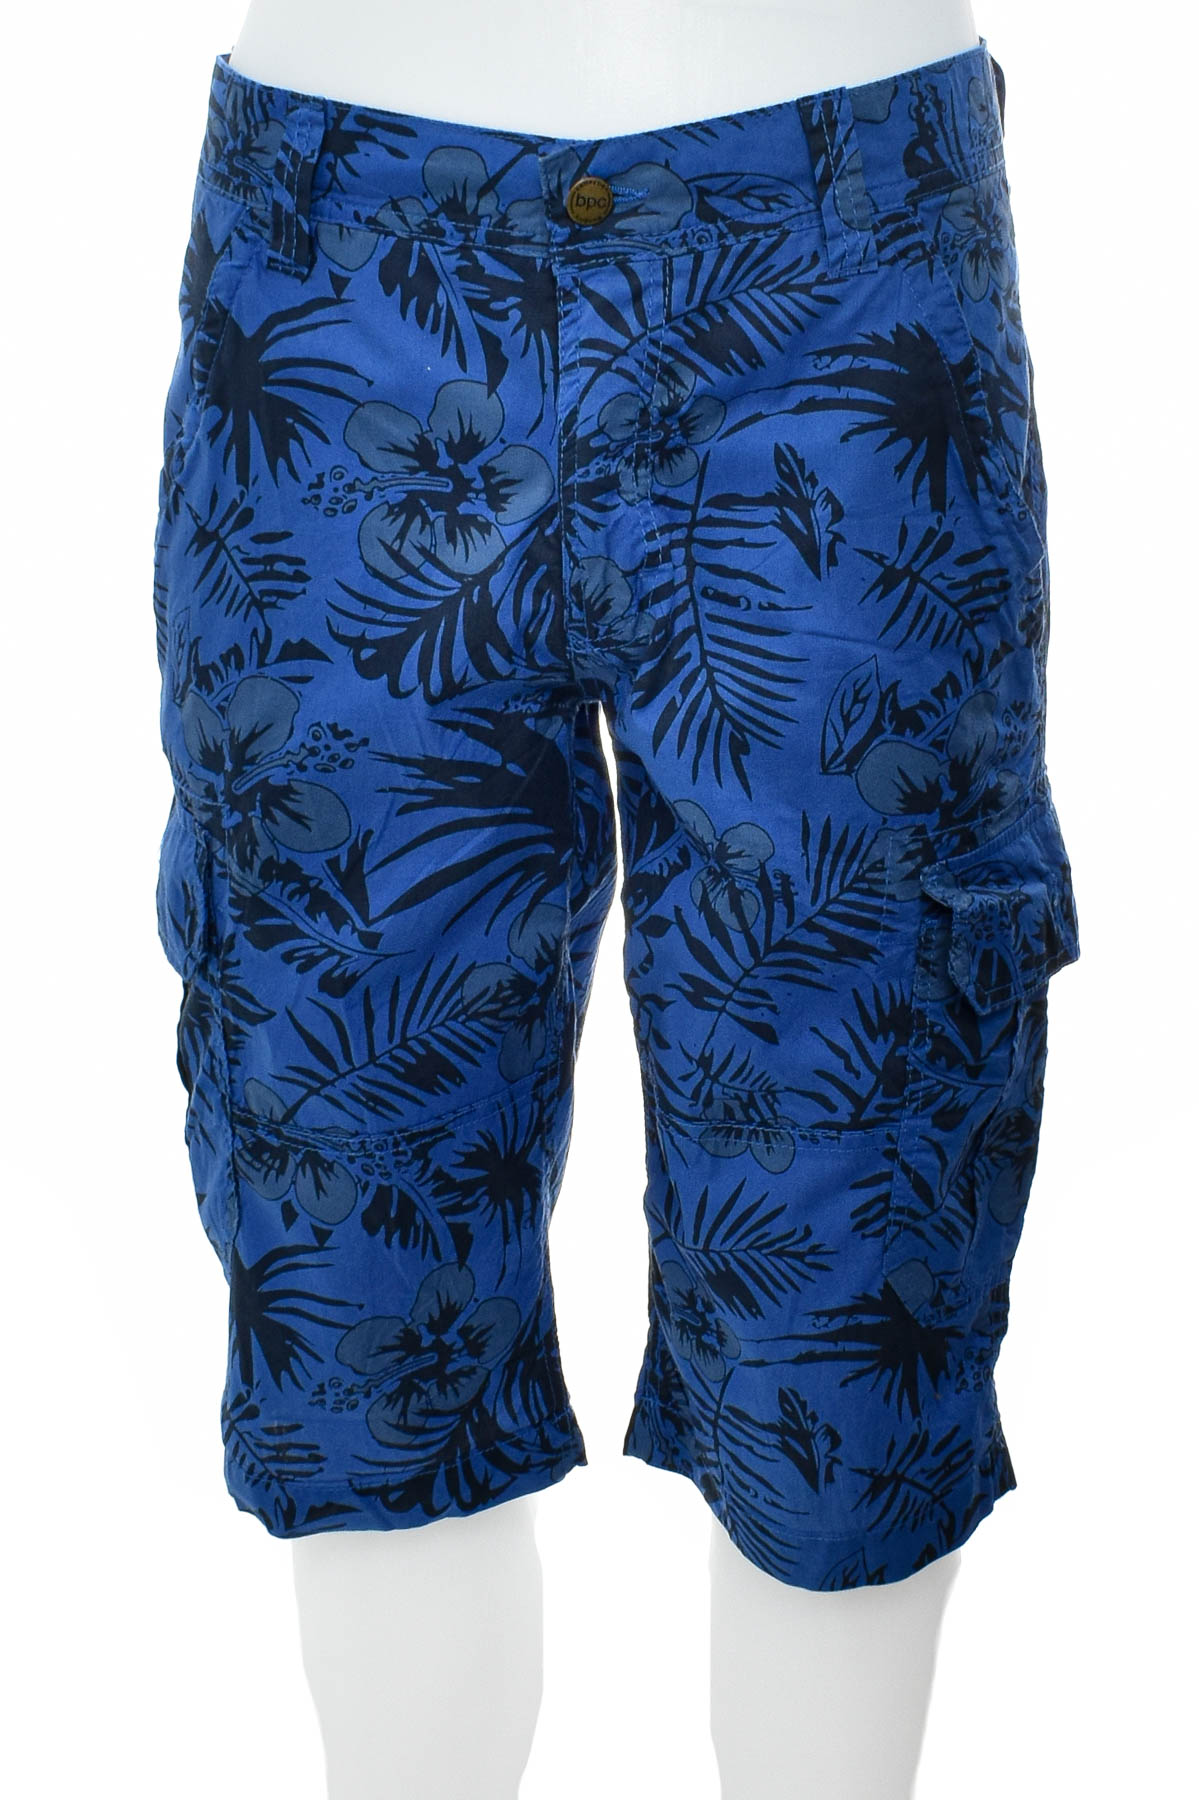 Men's shorts - Bpc Bonprix Collection - 0